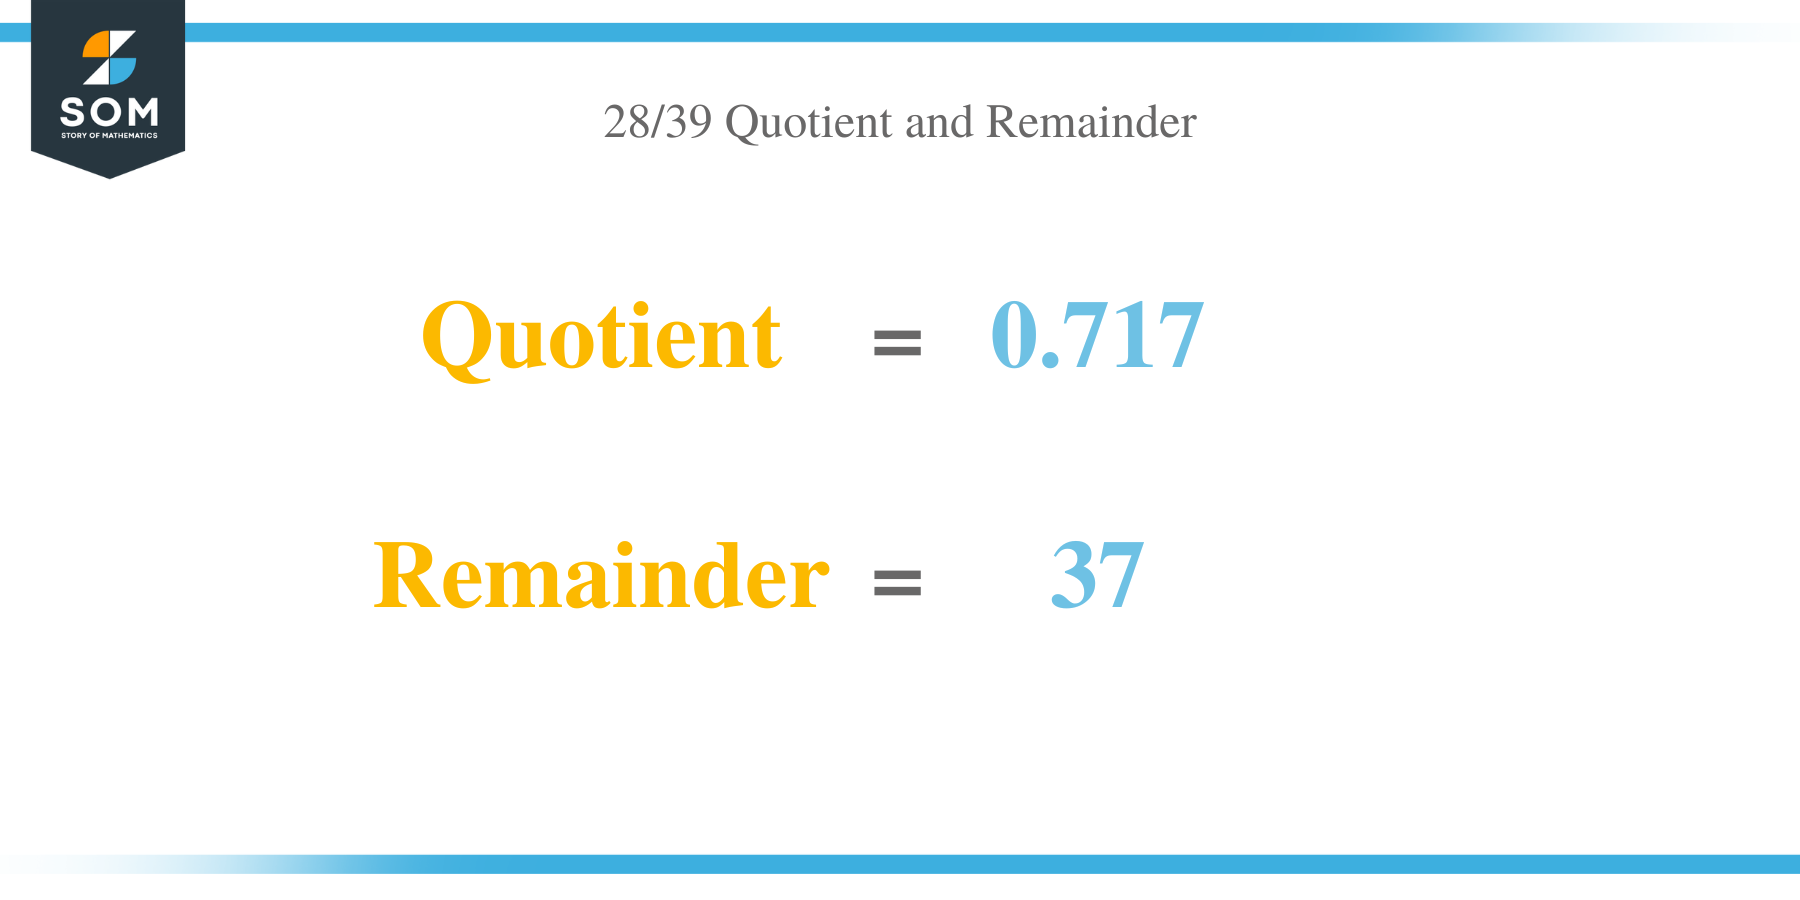 Quotient and Remainder of 28 per 39